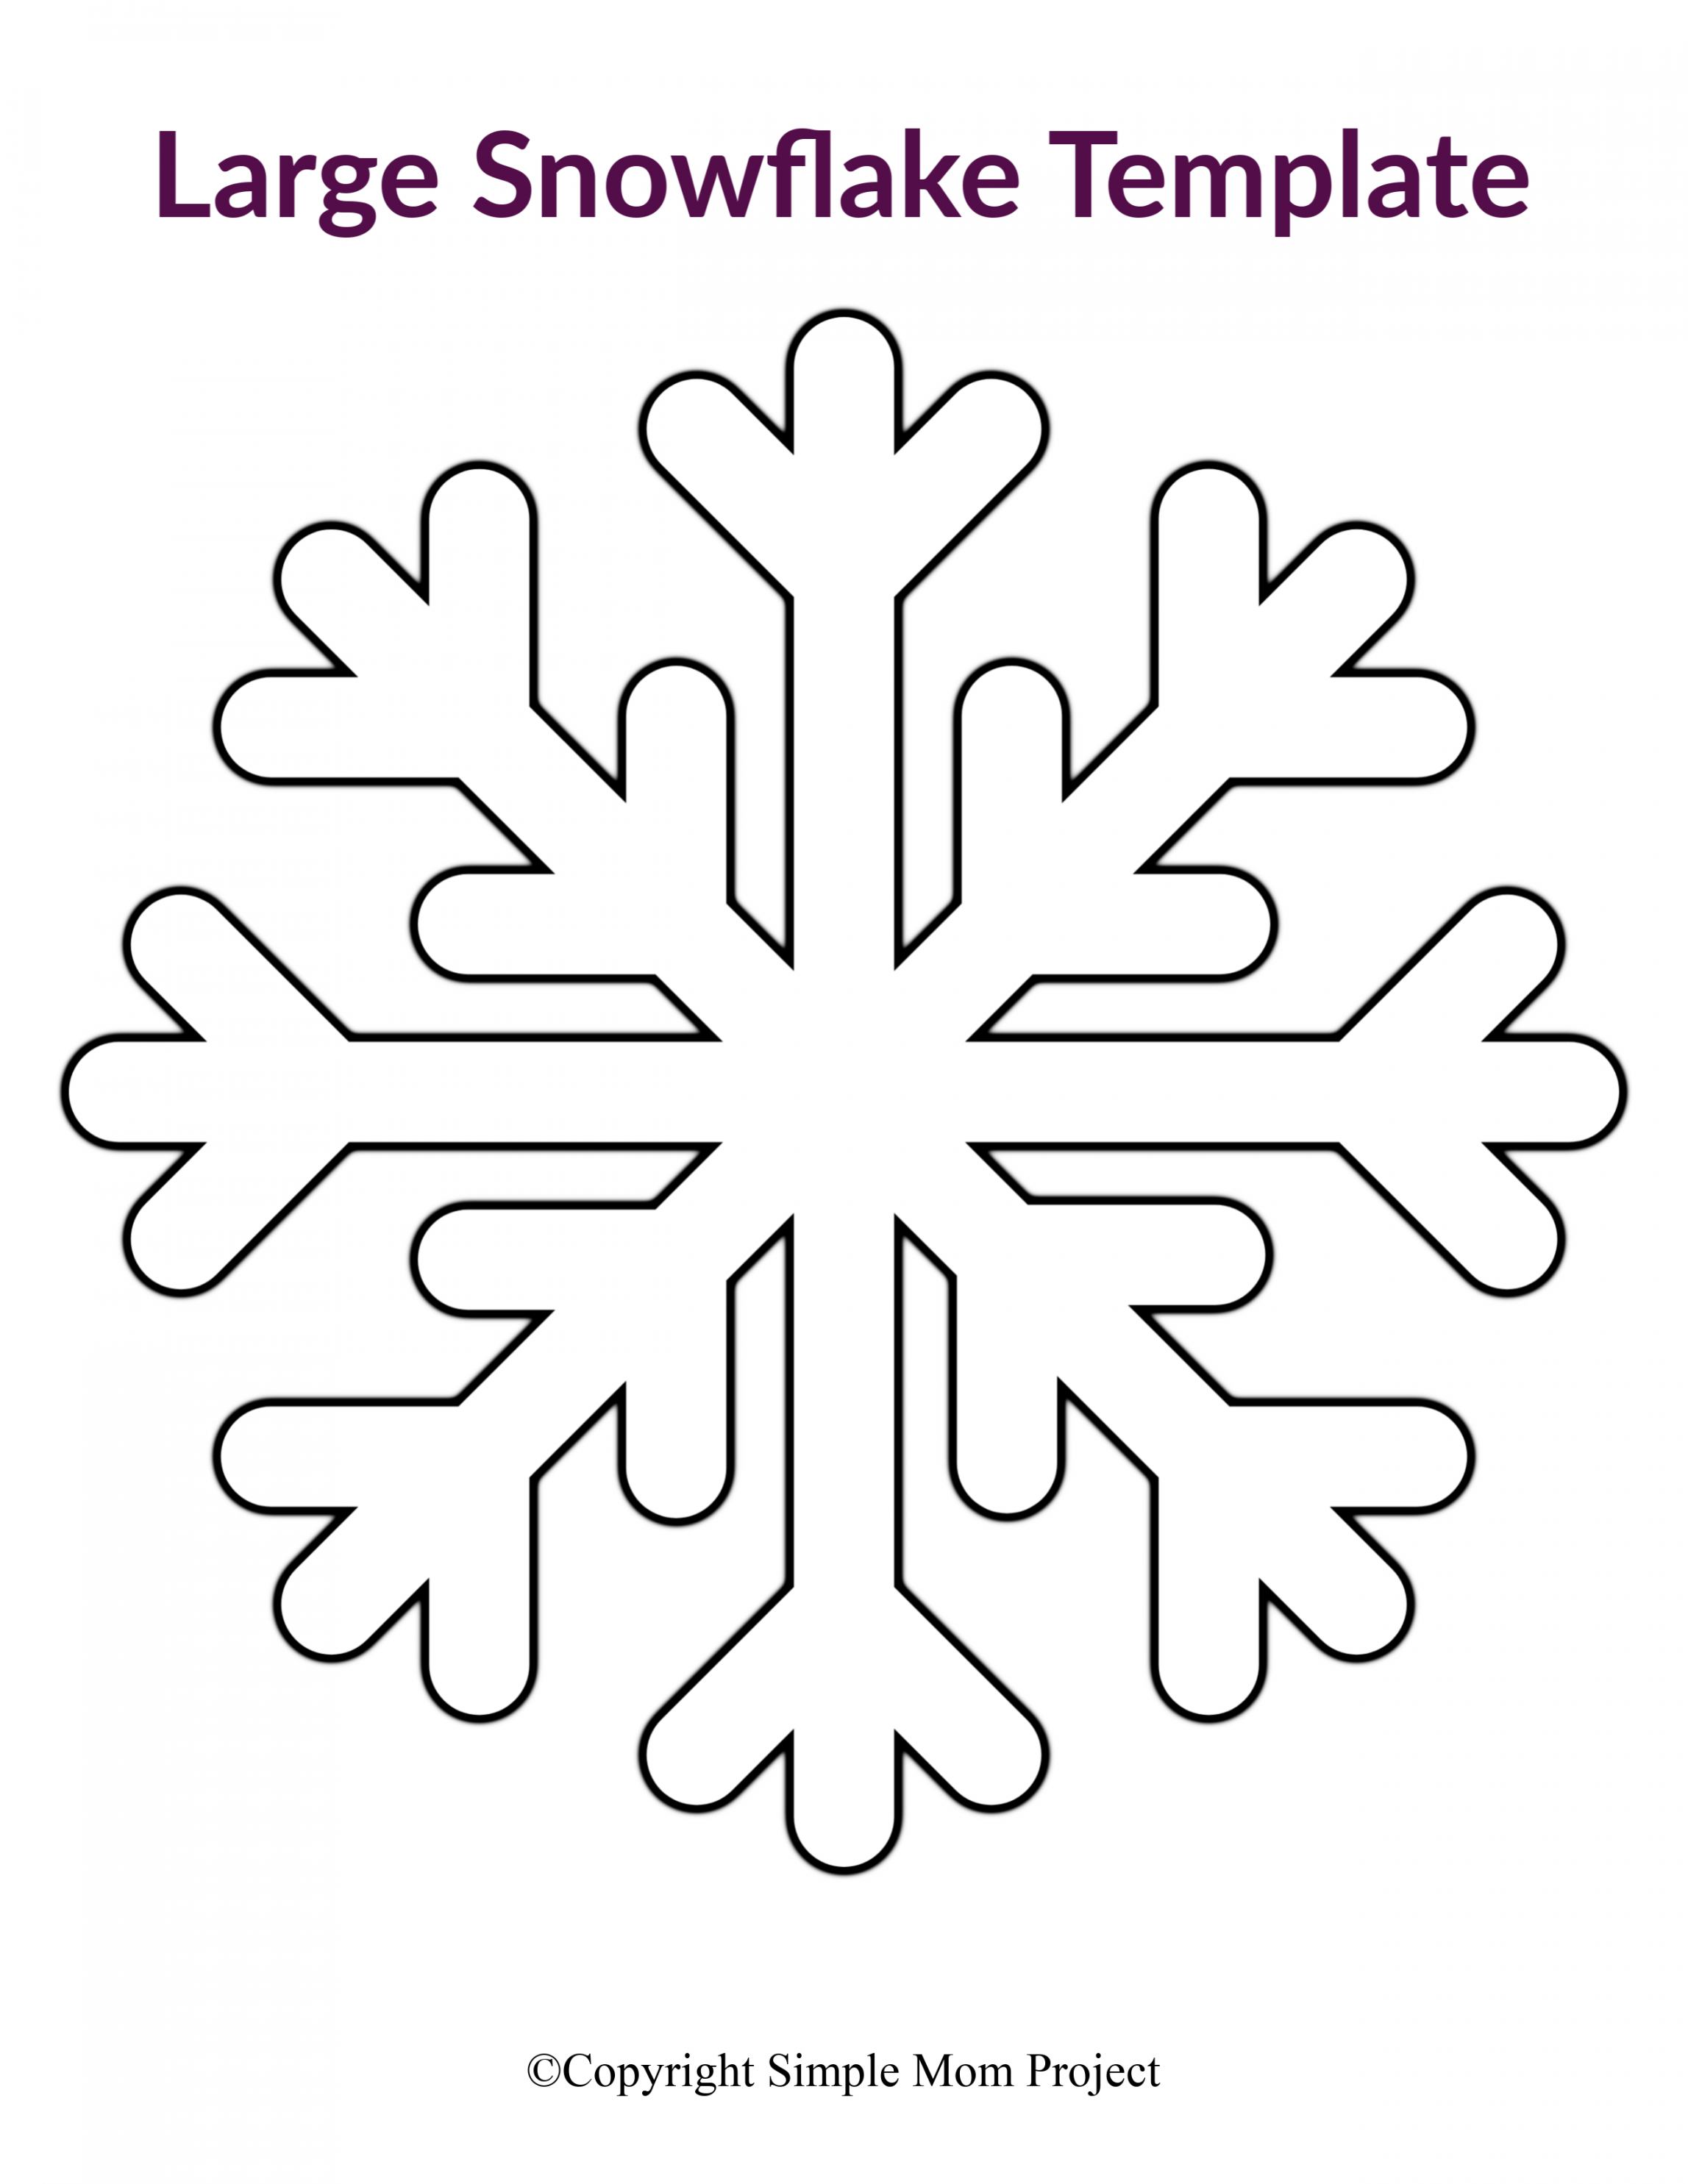 Free Printable Large Snowflake Templates - Simple Mom Project - FREE Printables - Snowflake Outline Printable